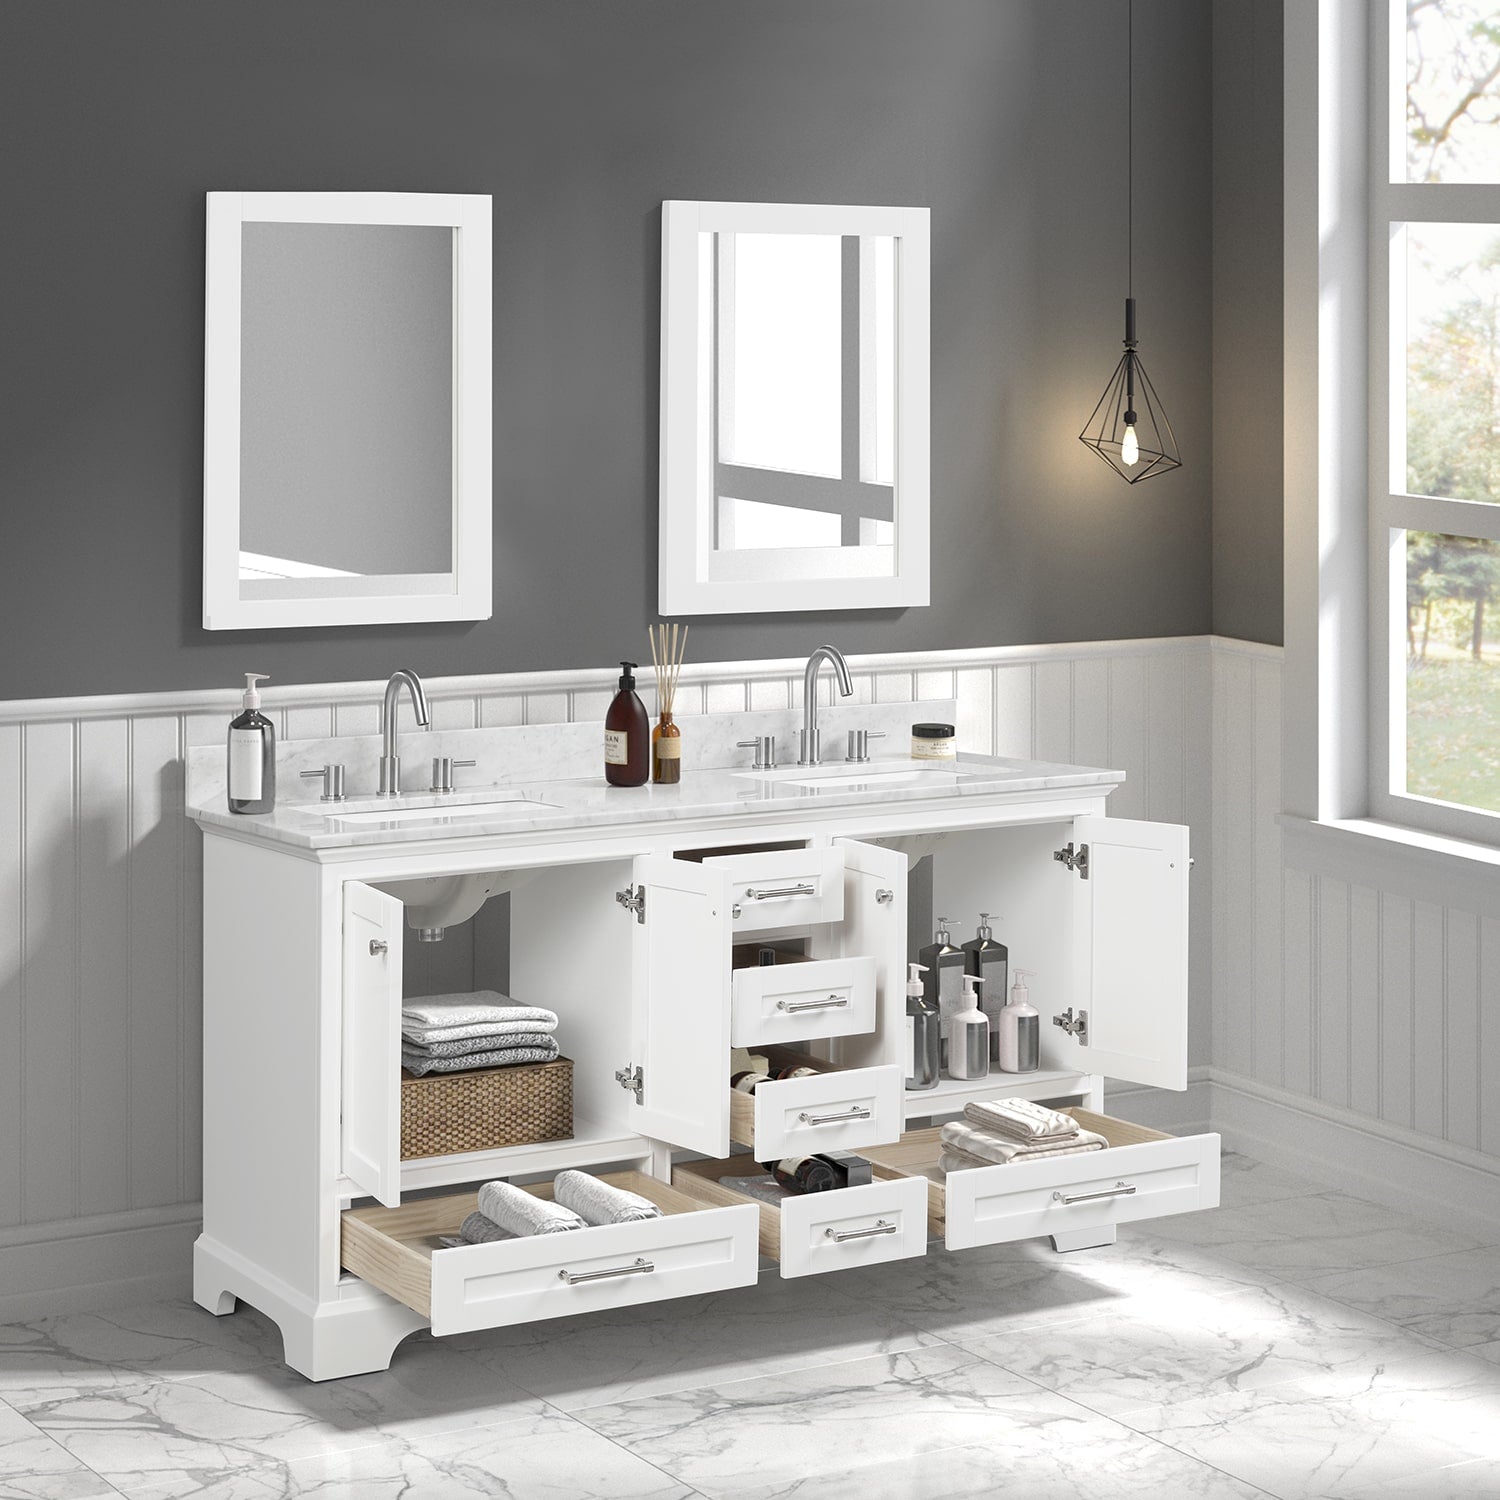 Copenhagen 60″ White Bathroom Vanity with Marble Countertop - Contemporary Bathroom Vanity